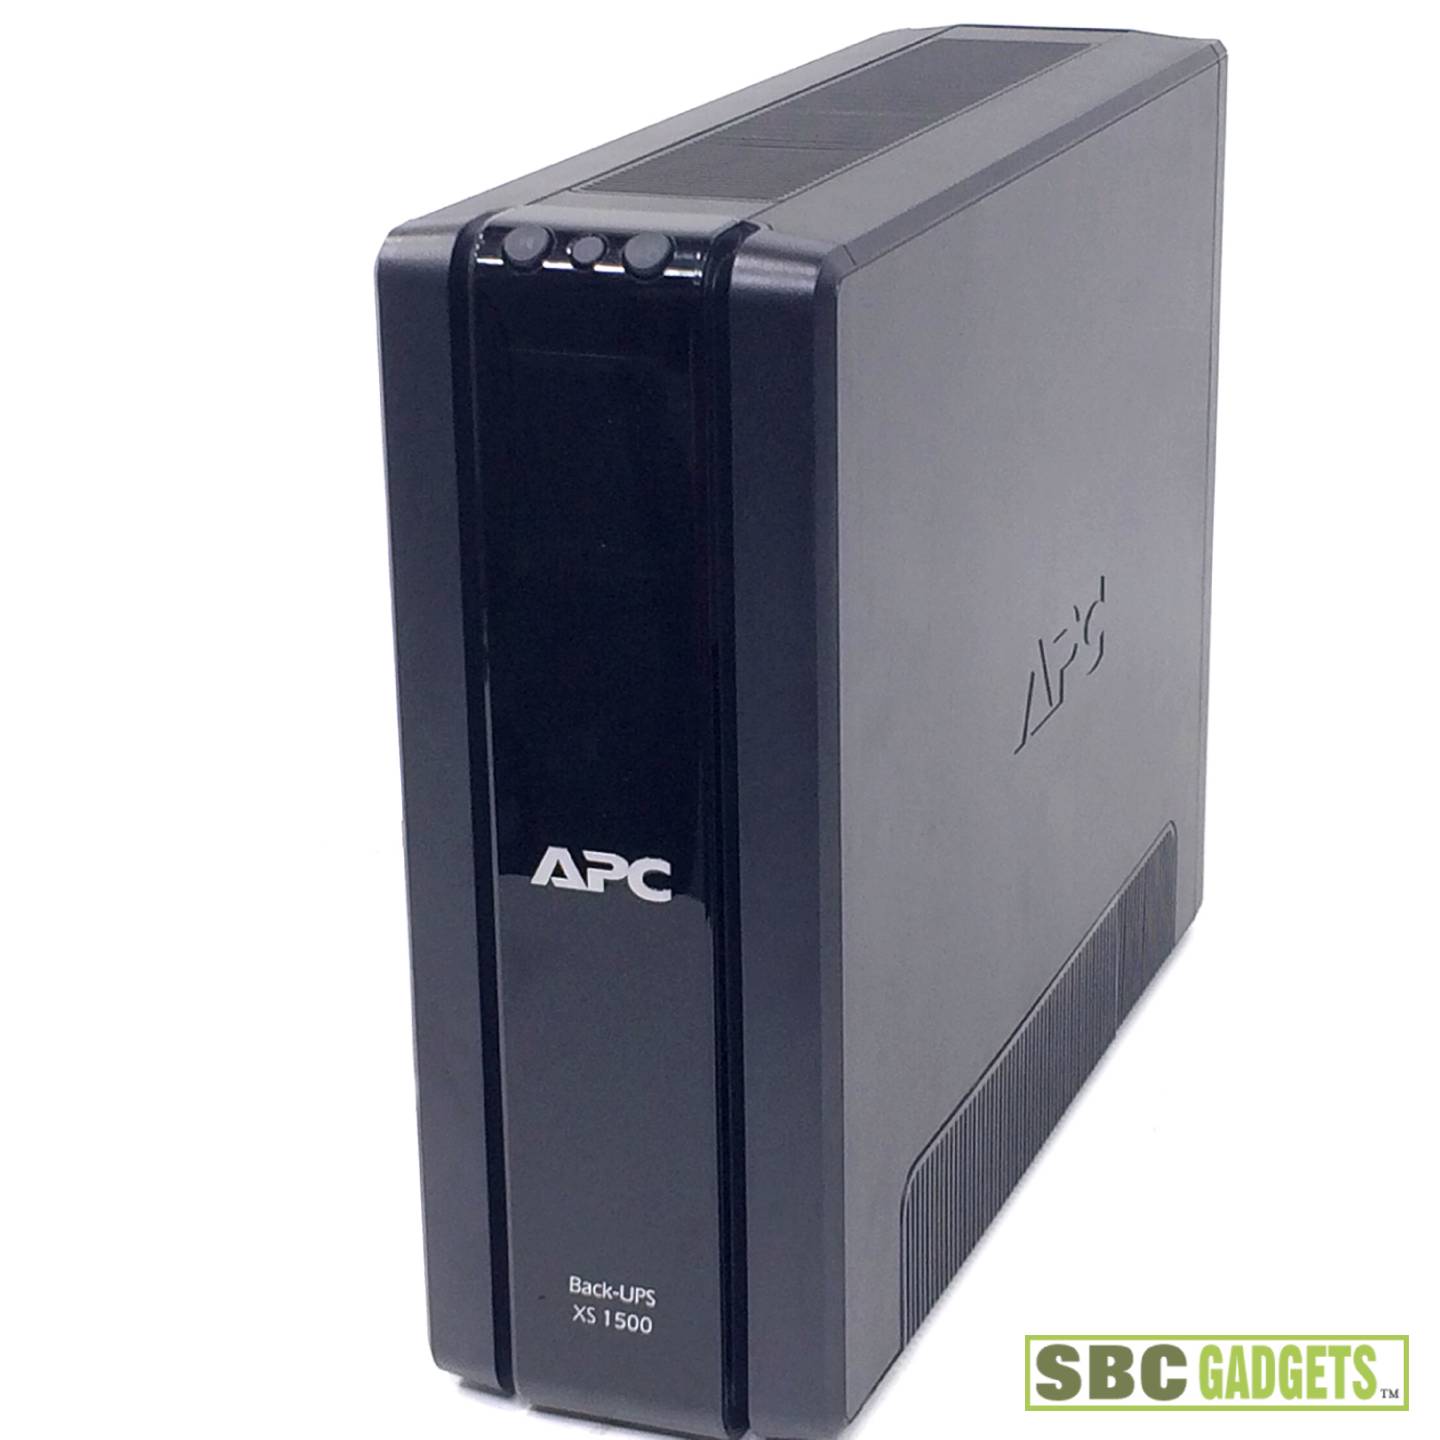 Apc Backup Ups 1500 Manual